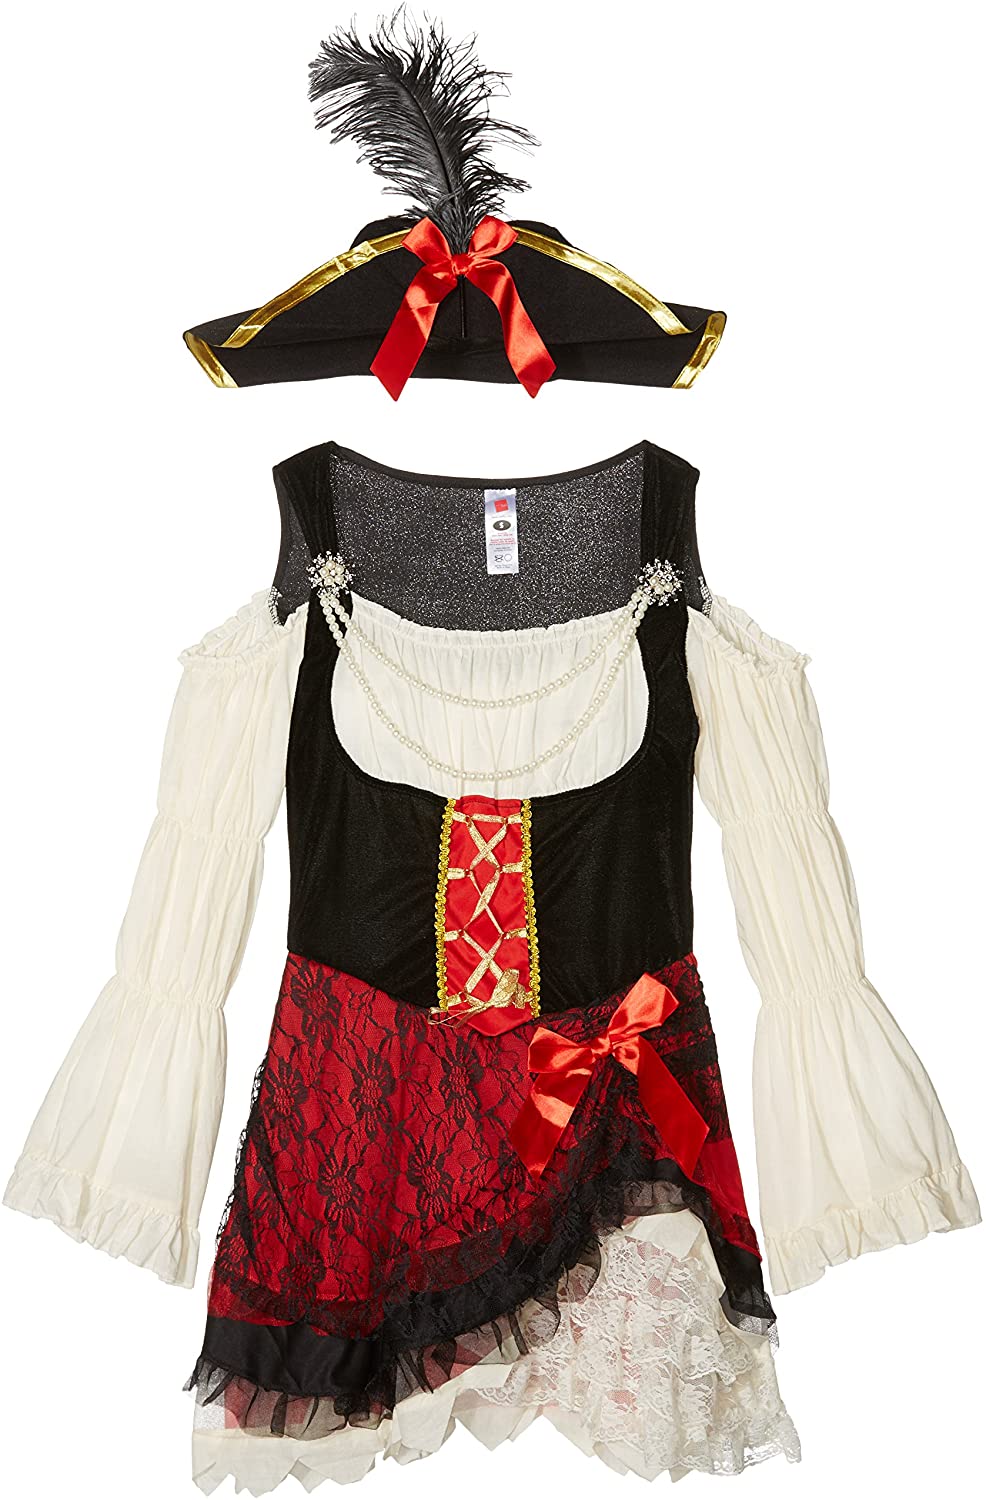 Smiffys Glamorous Lady Pirate Costume Toptoy 3795